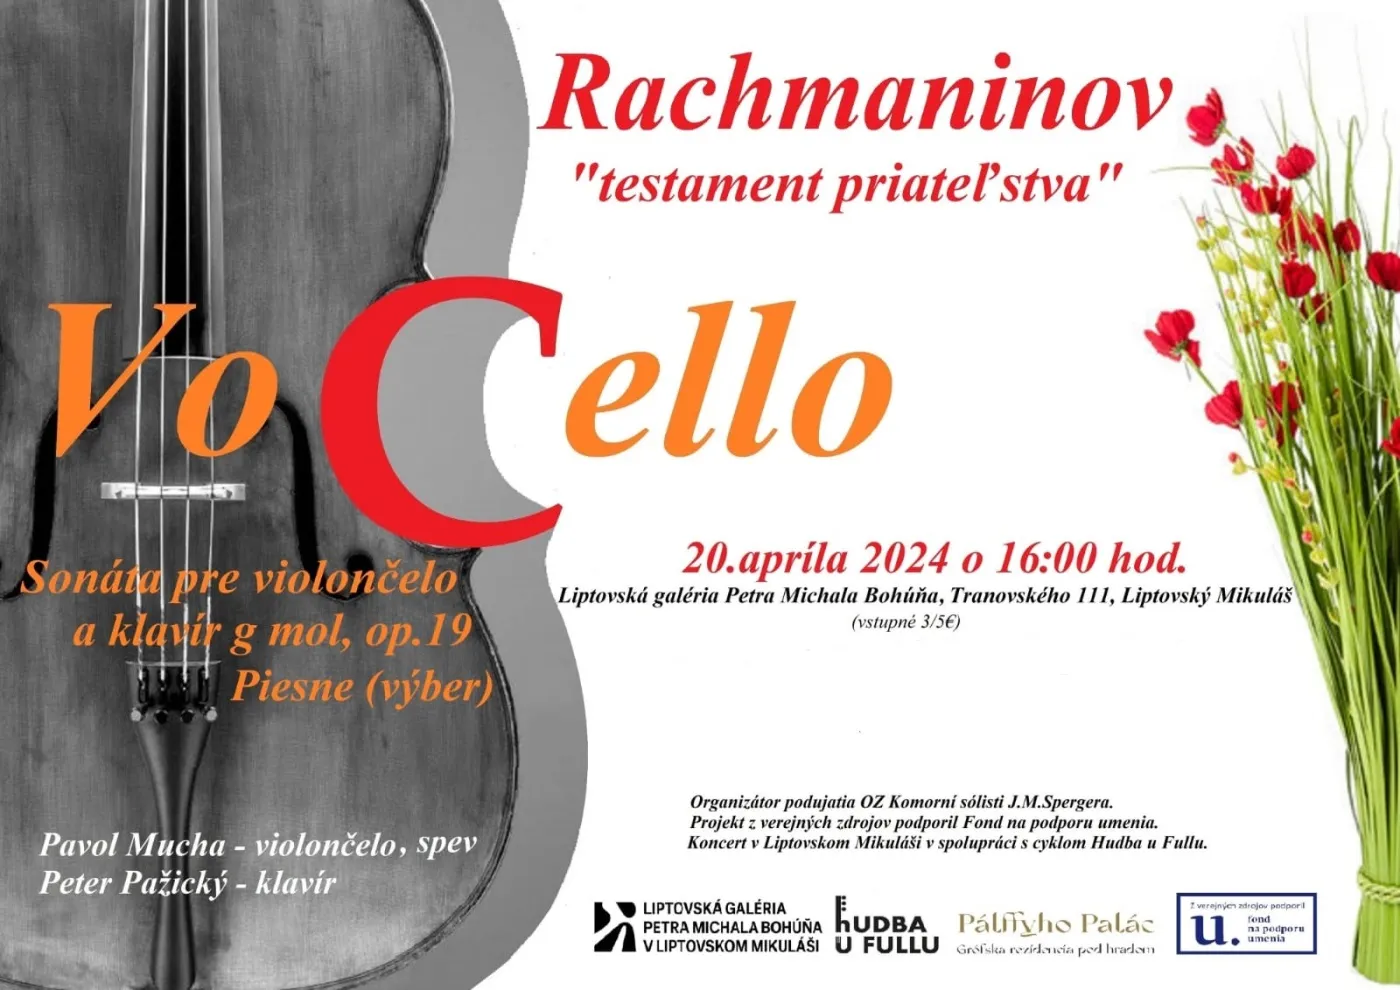 Koncert Vocello - Rachmaninov testament priateľstva